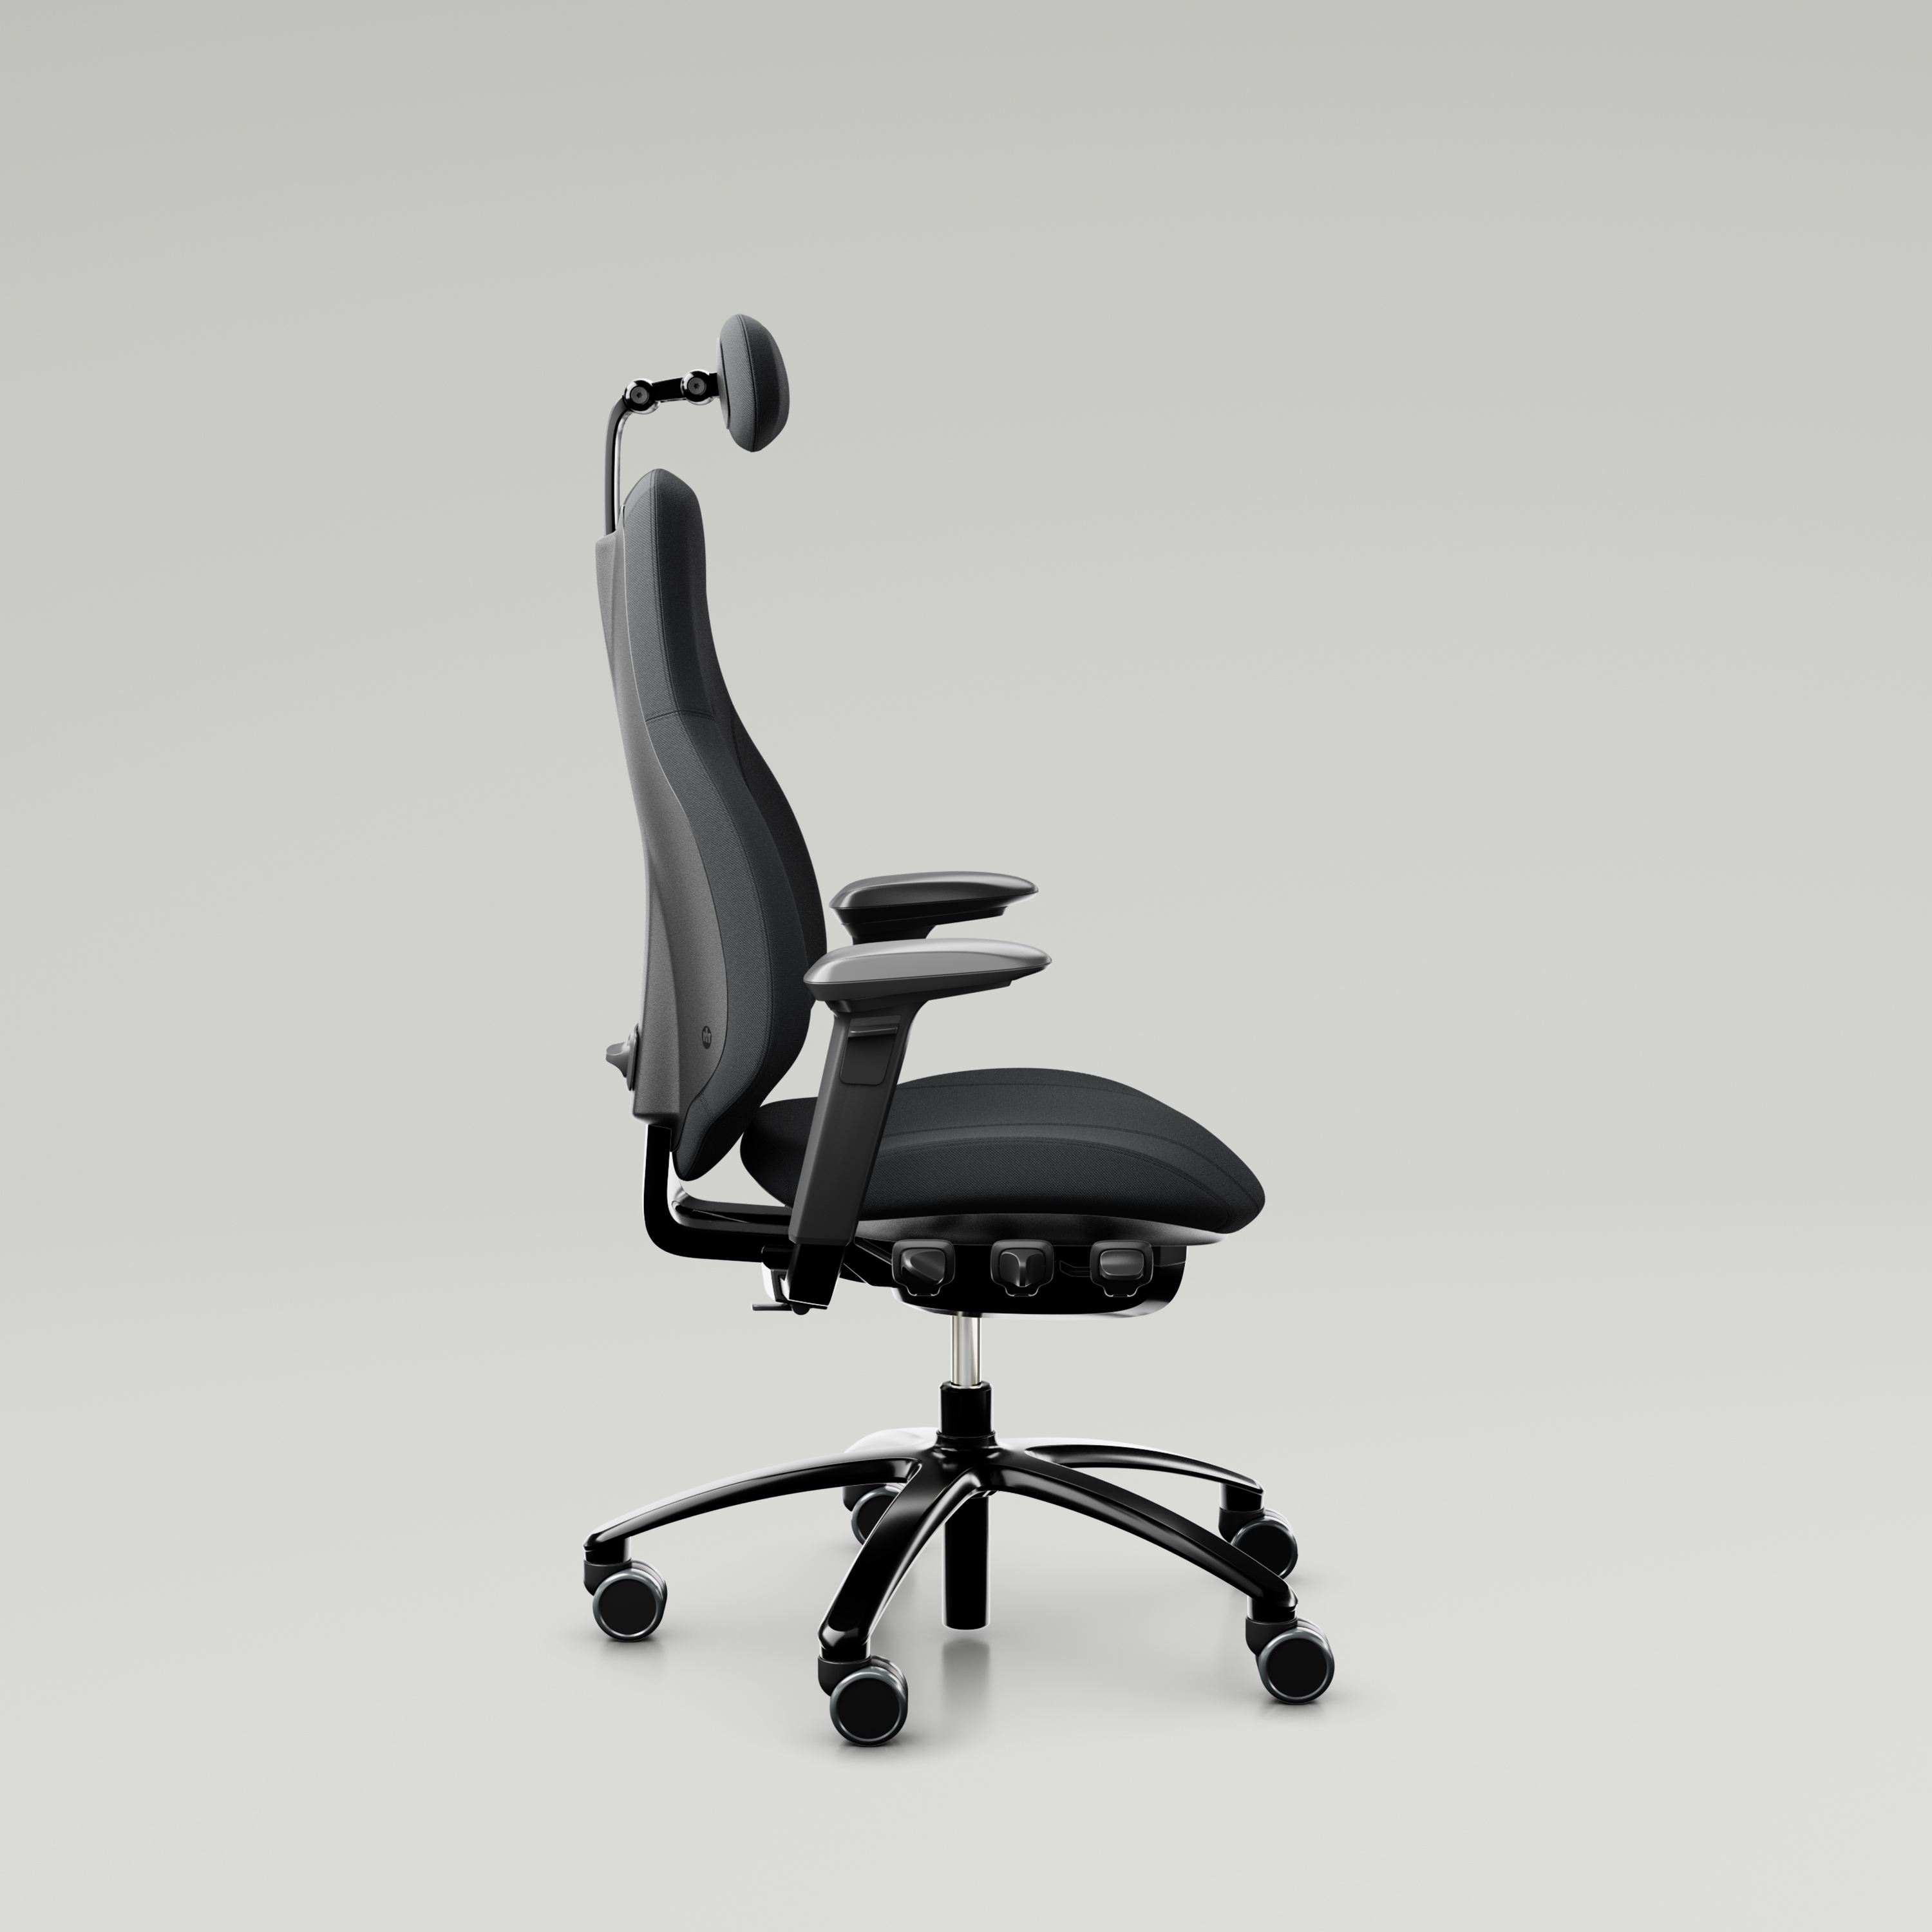 Office chair RH Mereo 220, dark gray fabric upholstery, black